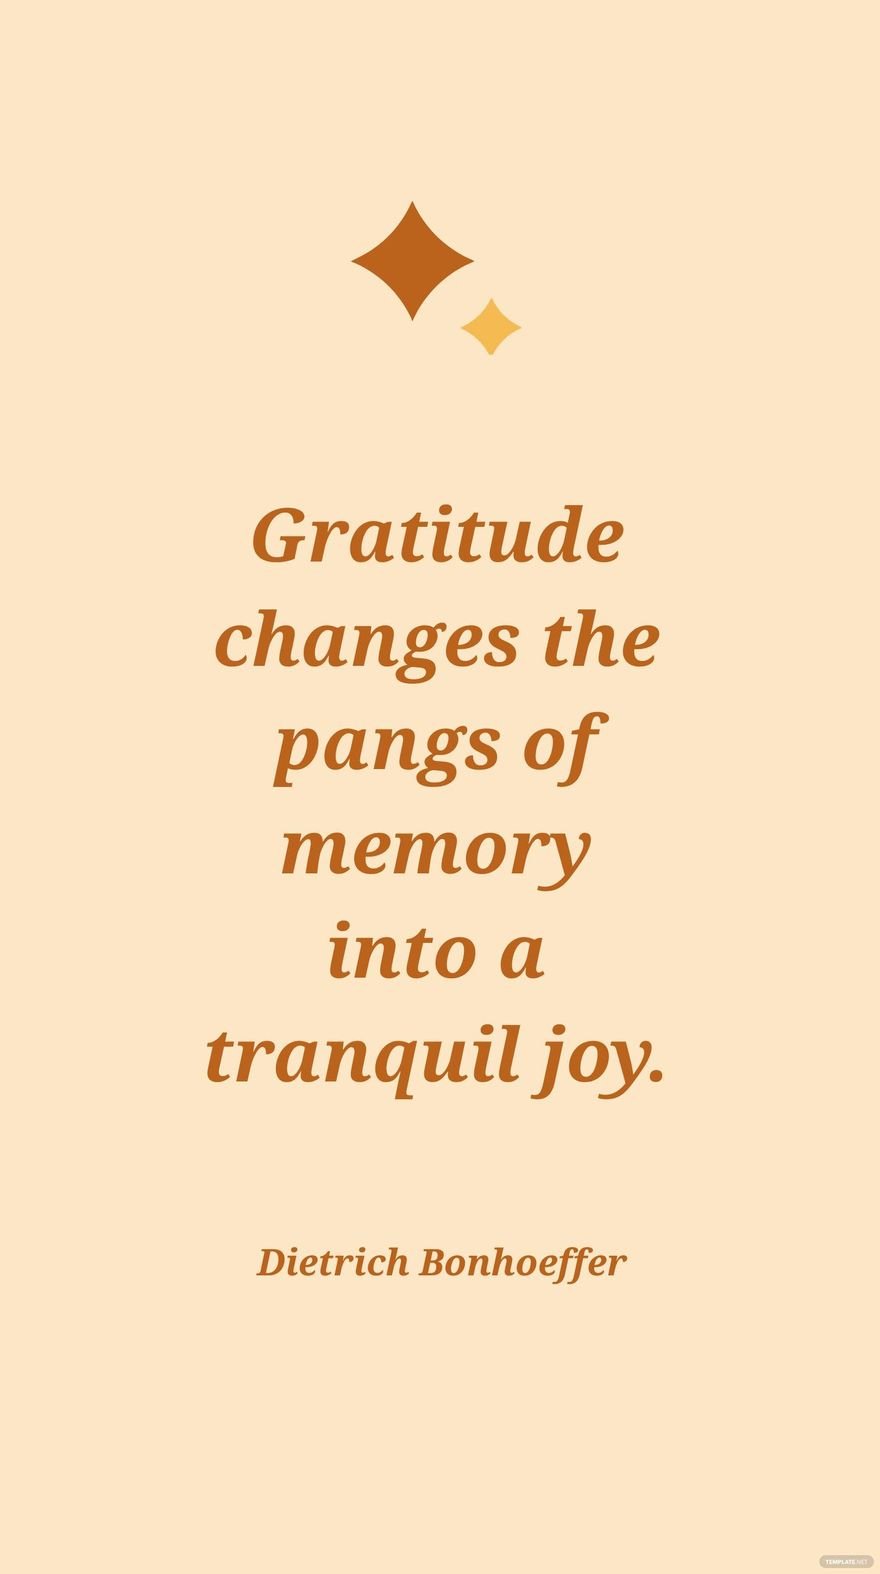 Dietrich Bonhoeffer - Gratitude changes the pangs of memory into a tranquil joy.